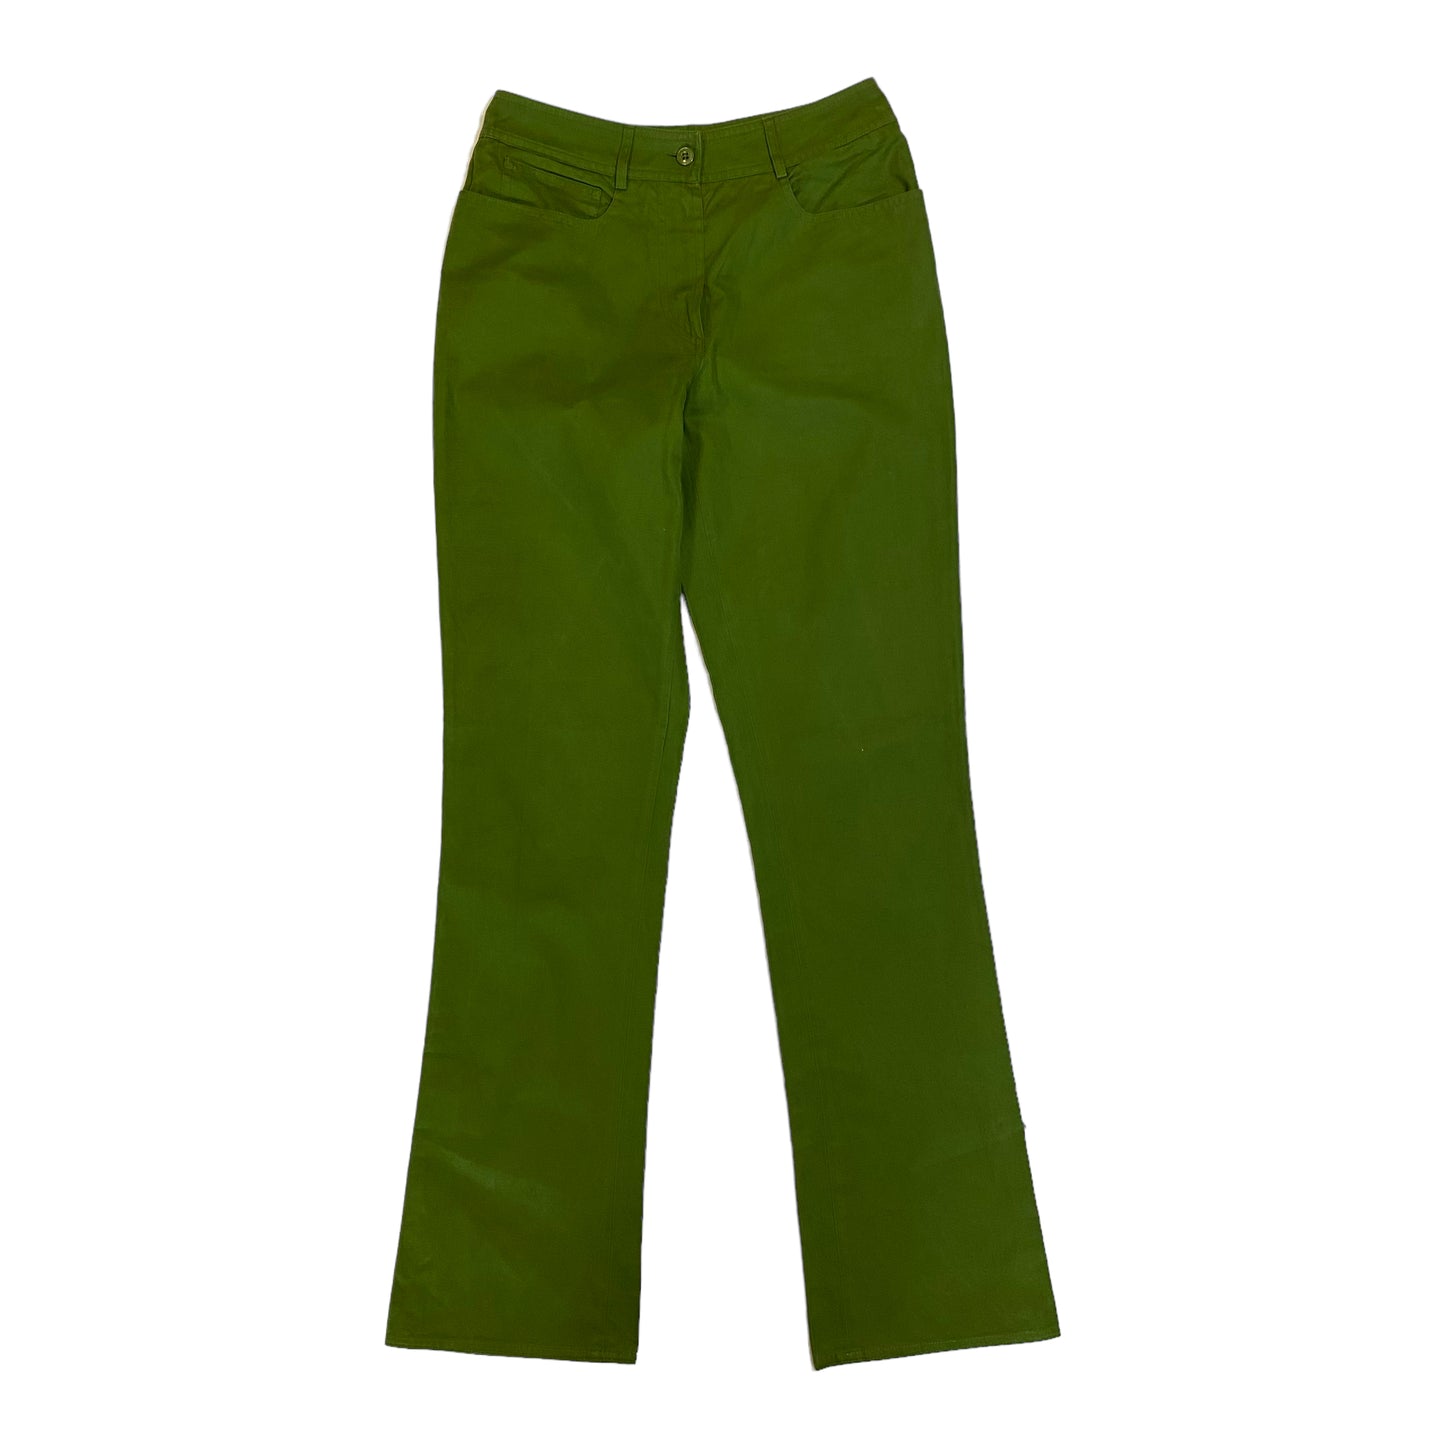 00's Miu Miu Green Pant (34W)